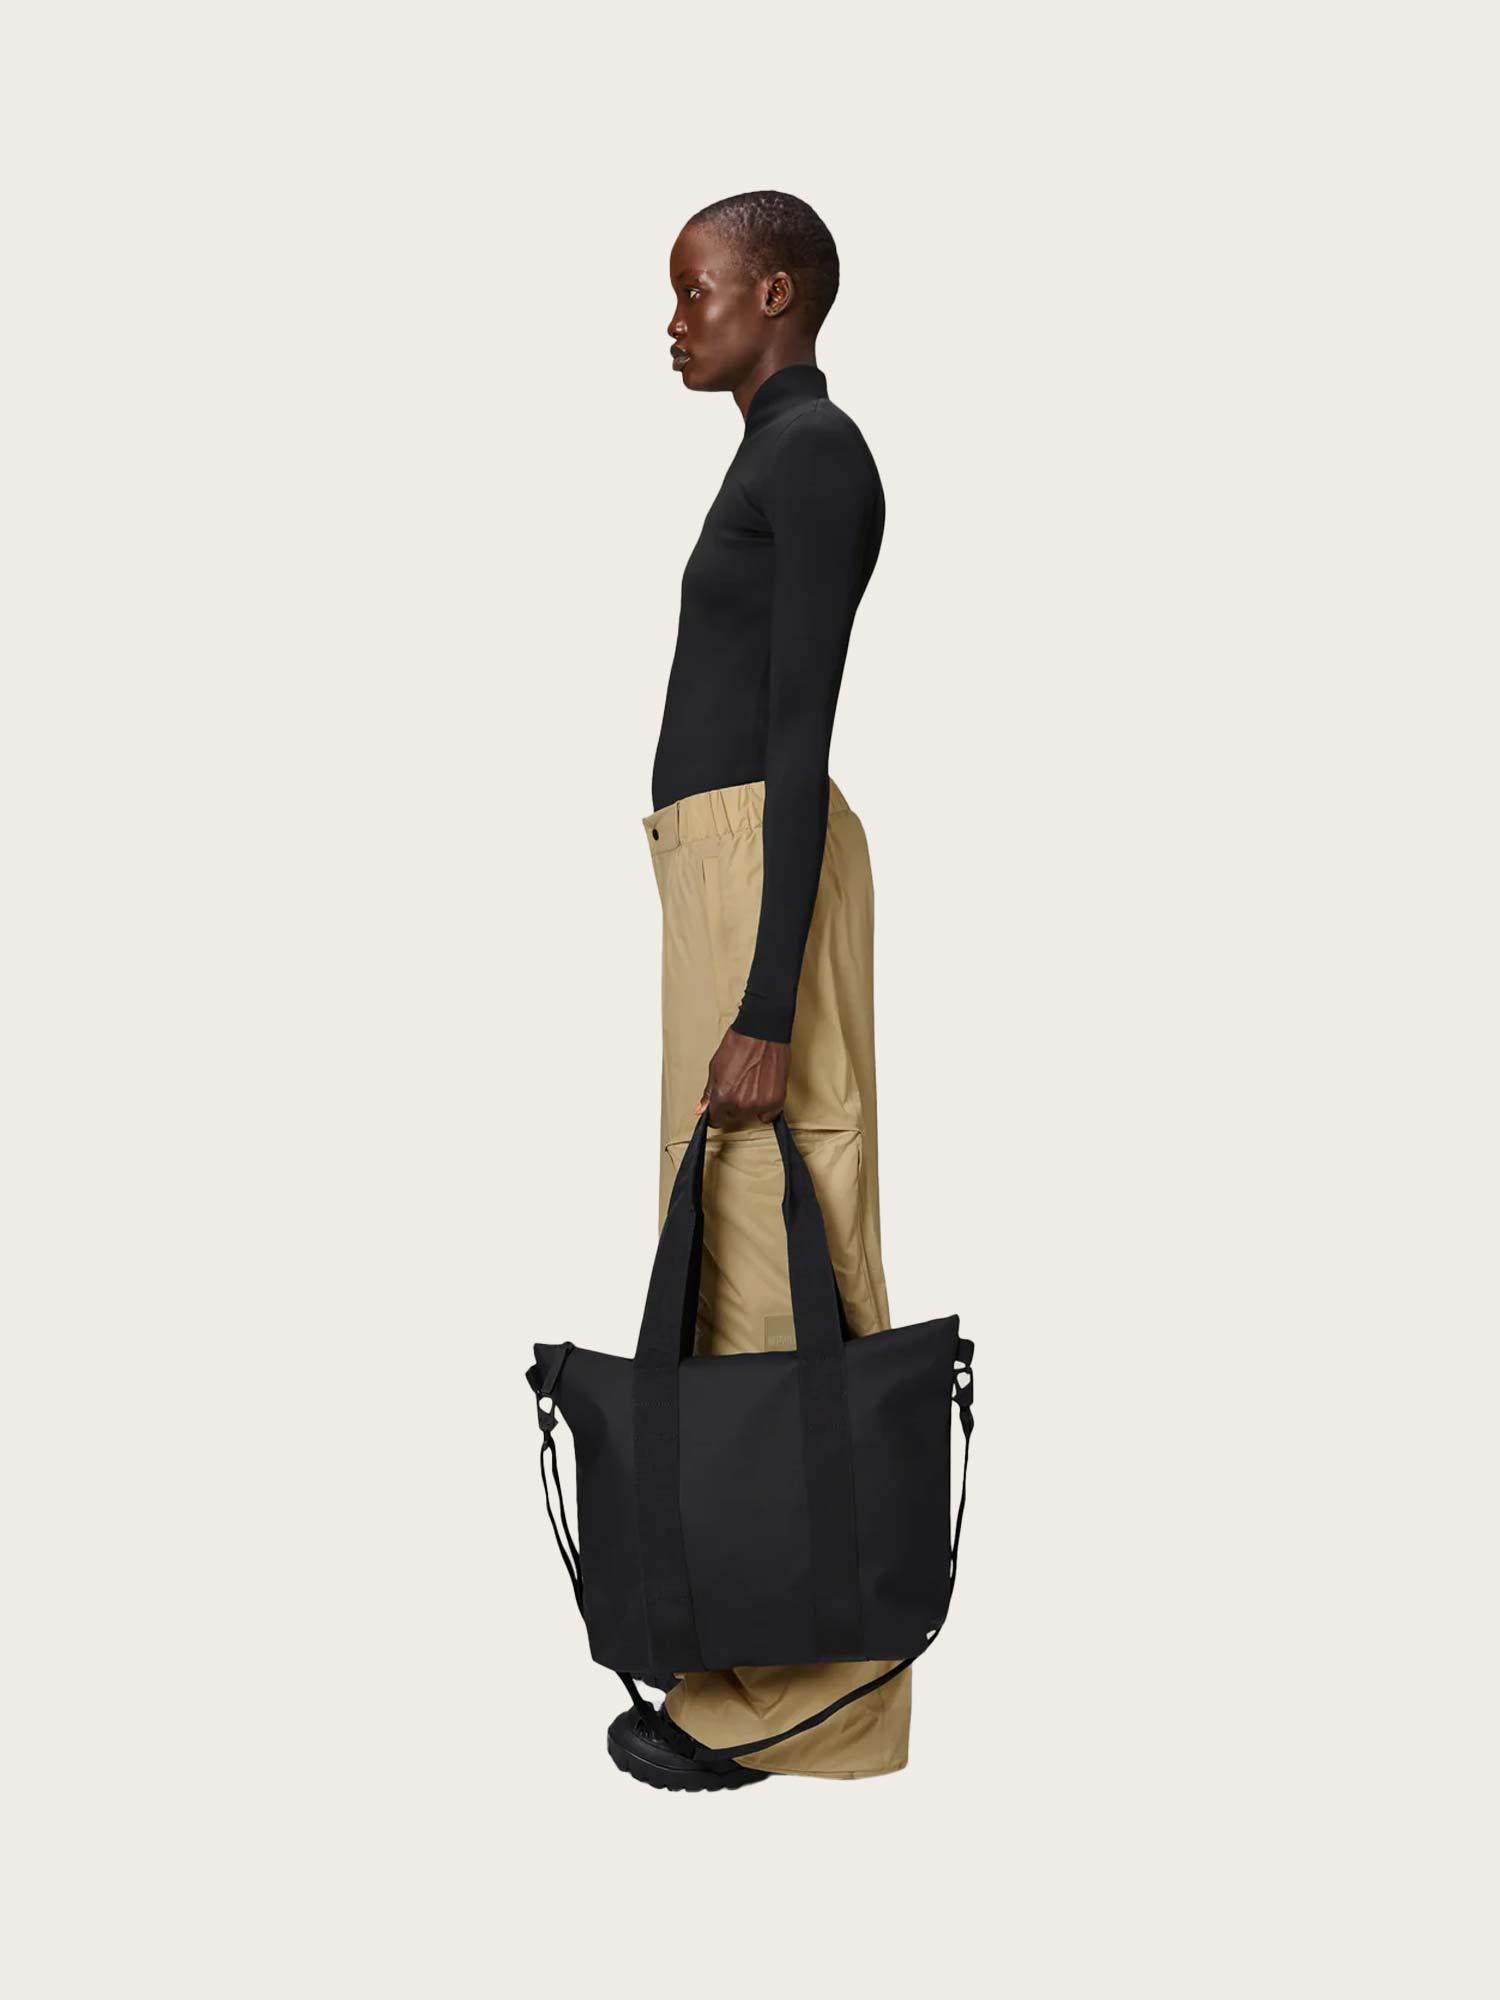 Tote Bag Mini W3 - Black